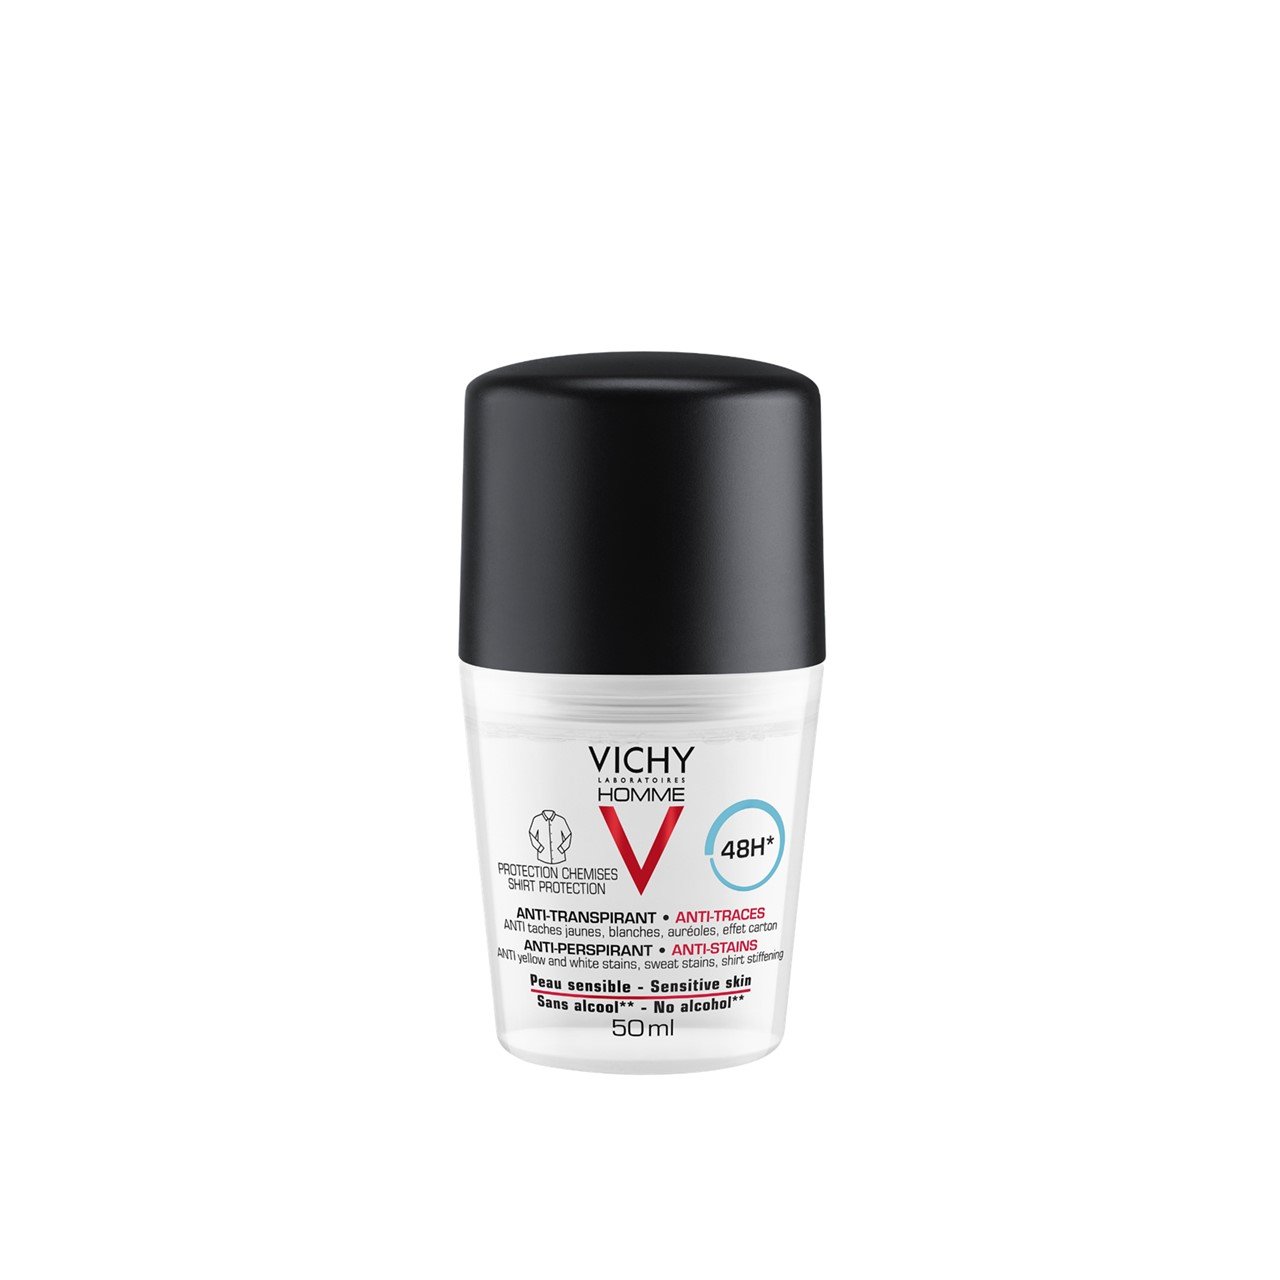 Vichy Homme Deodorant Anti-Perspirant Anti-Stains 48h 50ml (1.69fl oz)